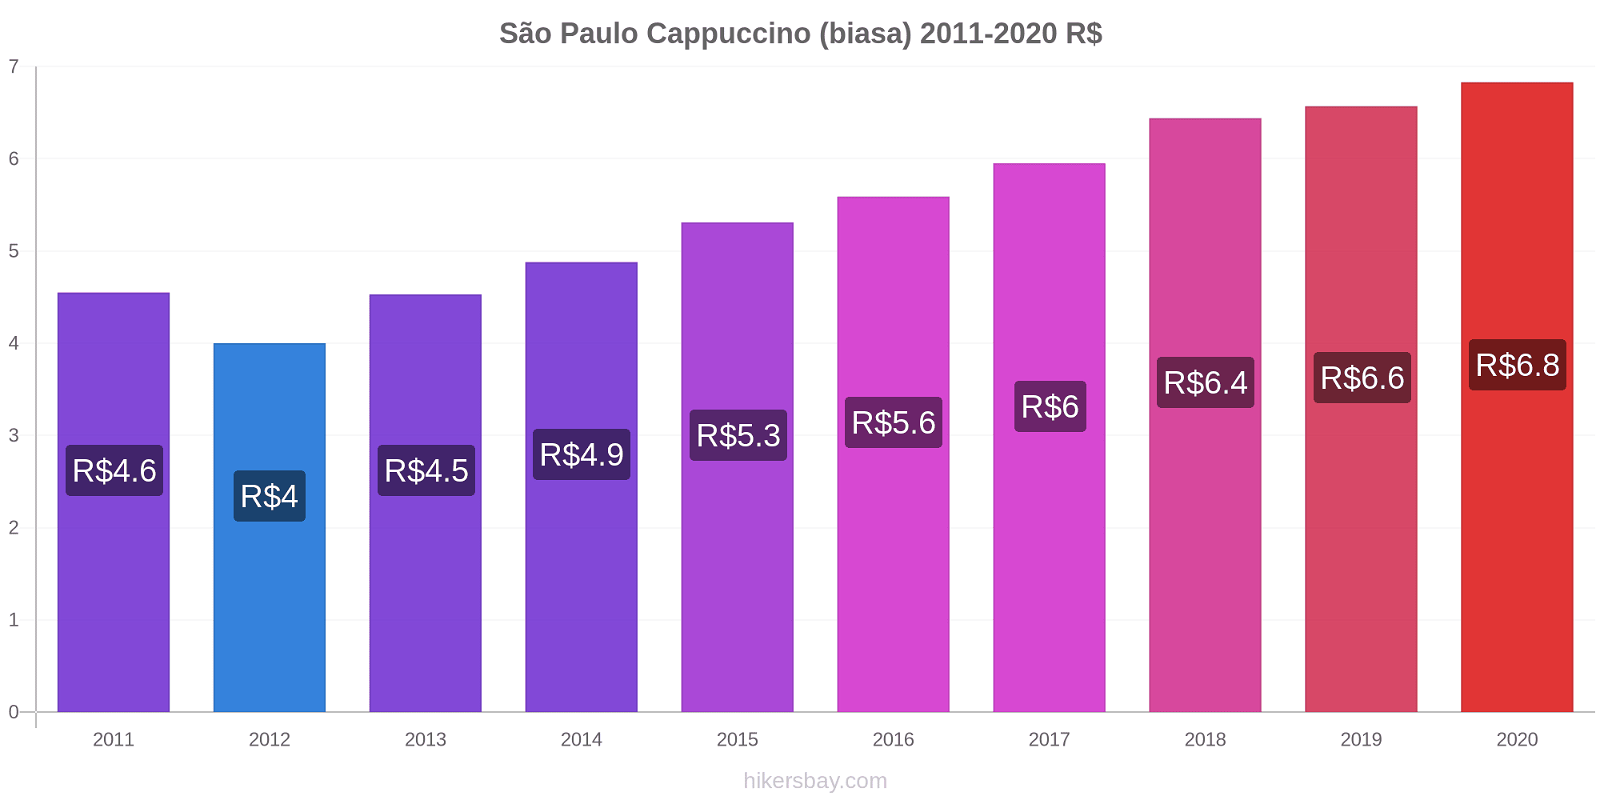 São Paulo perubahan harga Cappuccino (biasa) hikersbay.com